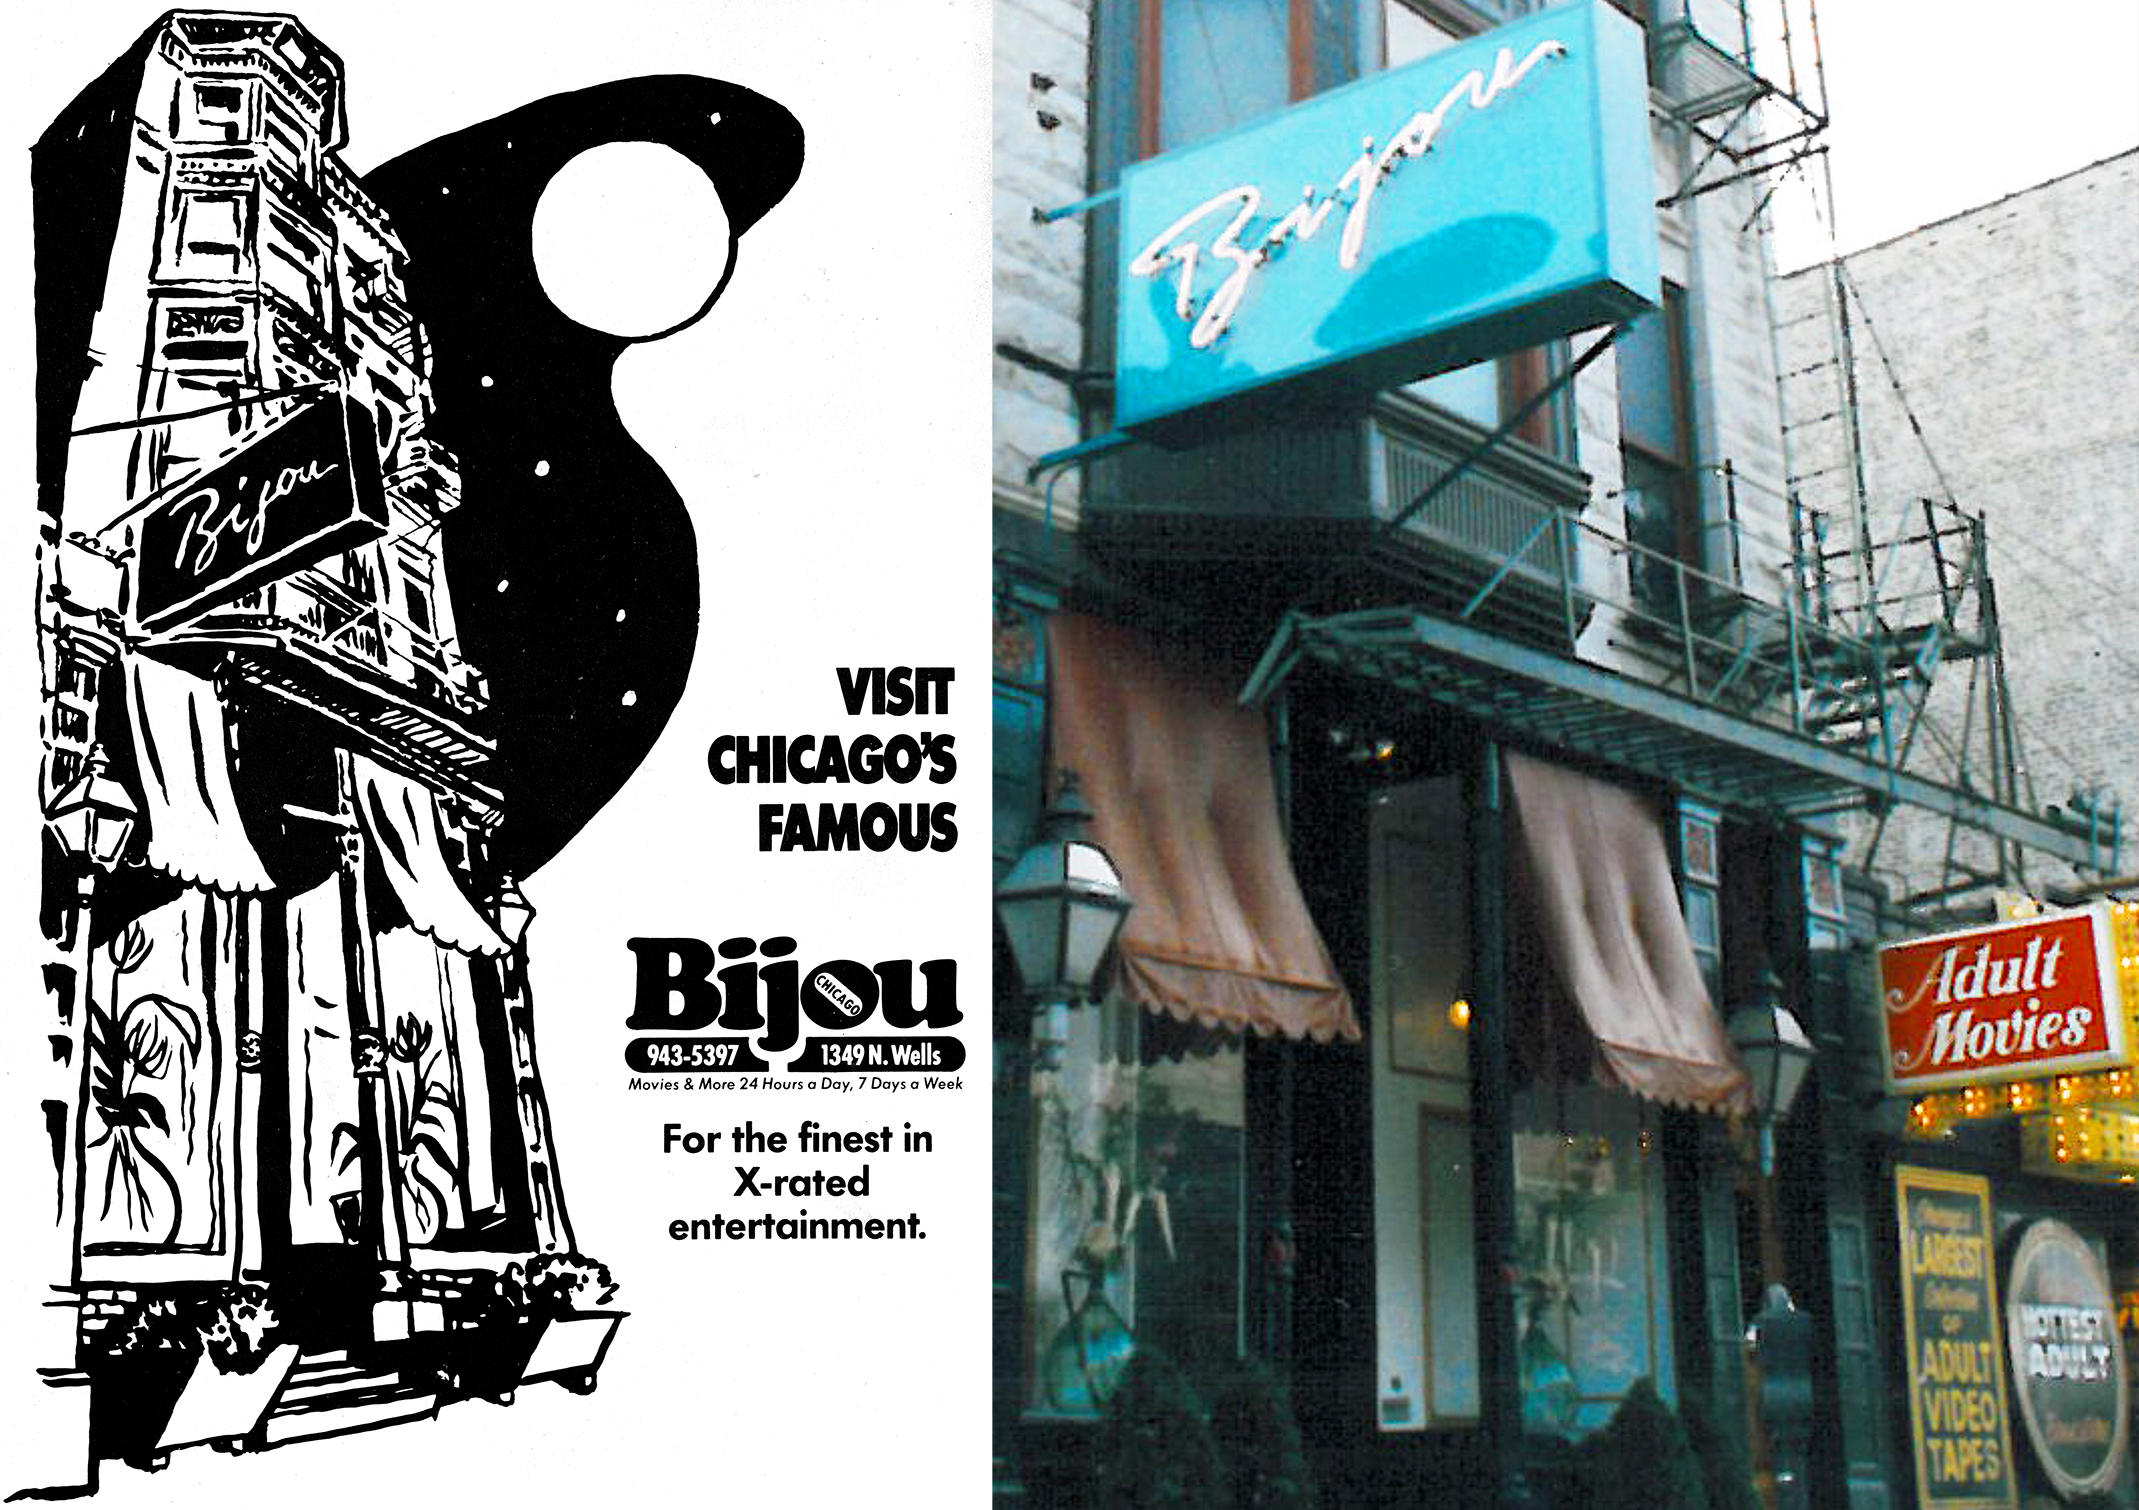 Vintage Bijou Theater ad and exterior photo